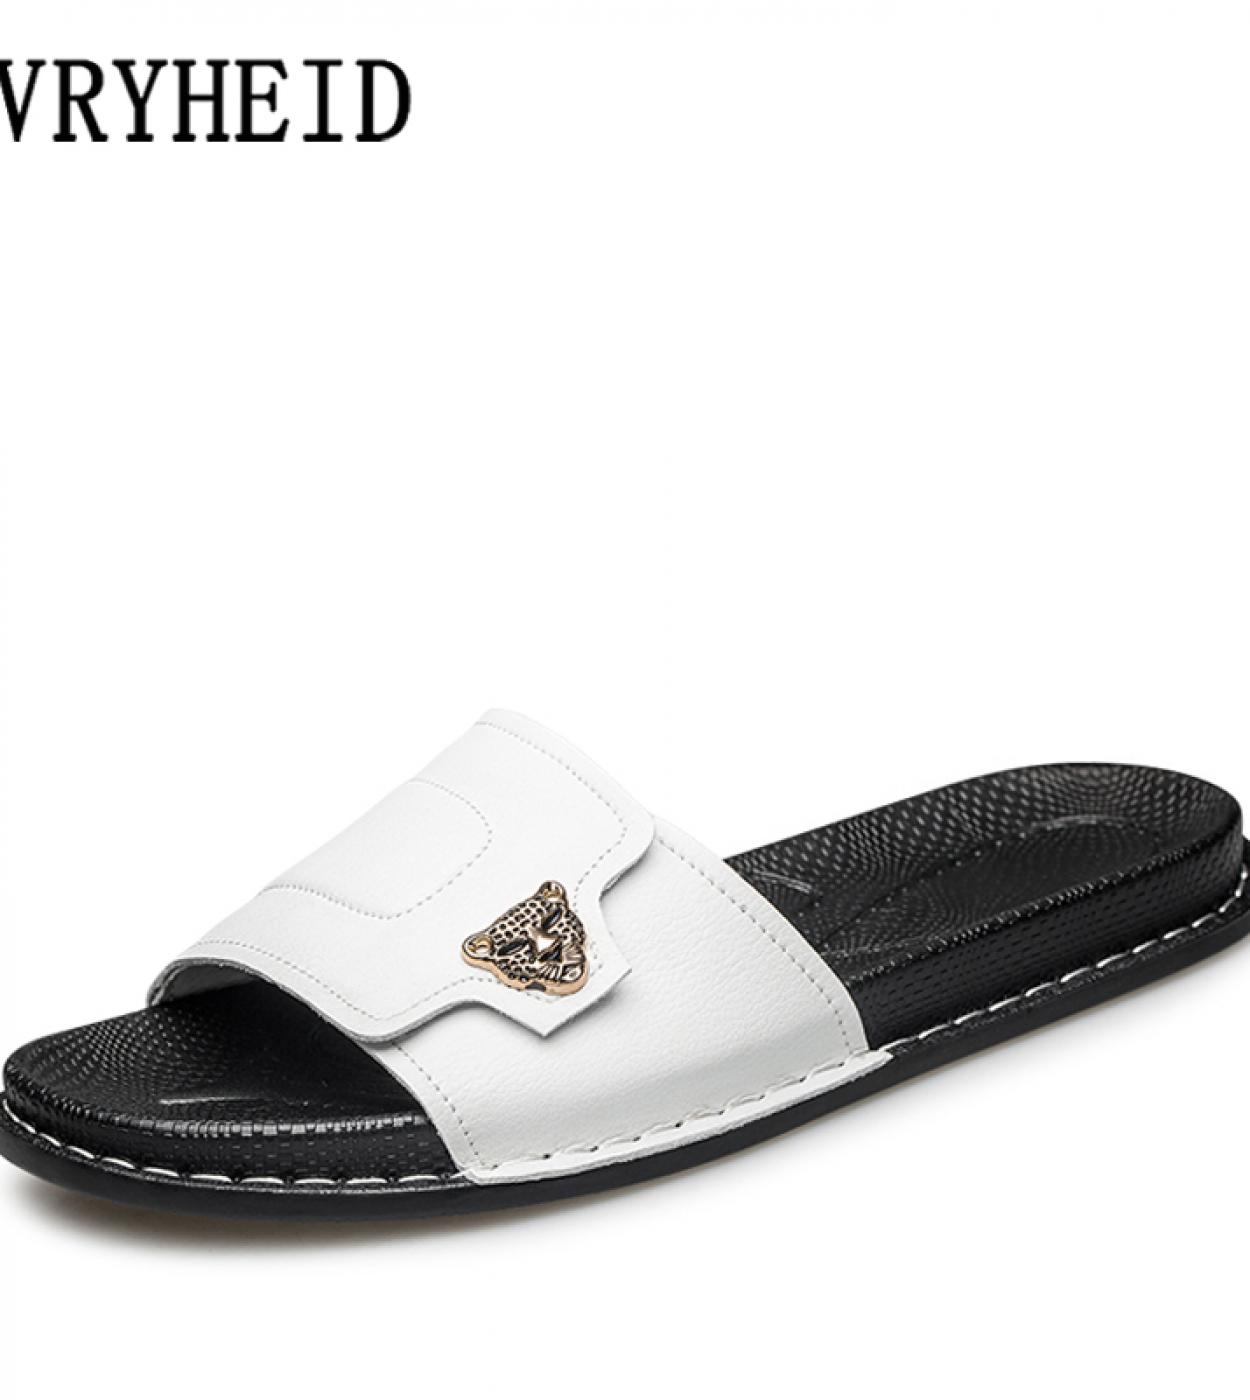 Vryheid جودة عالية الرجال النعال جلد طبيعي الصيف الأحذية الناعمة أزياء الذكور في الهواء الطلق شقة الرجال الصنادل عارضة Beac